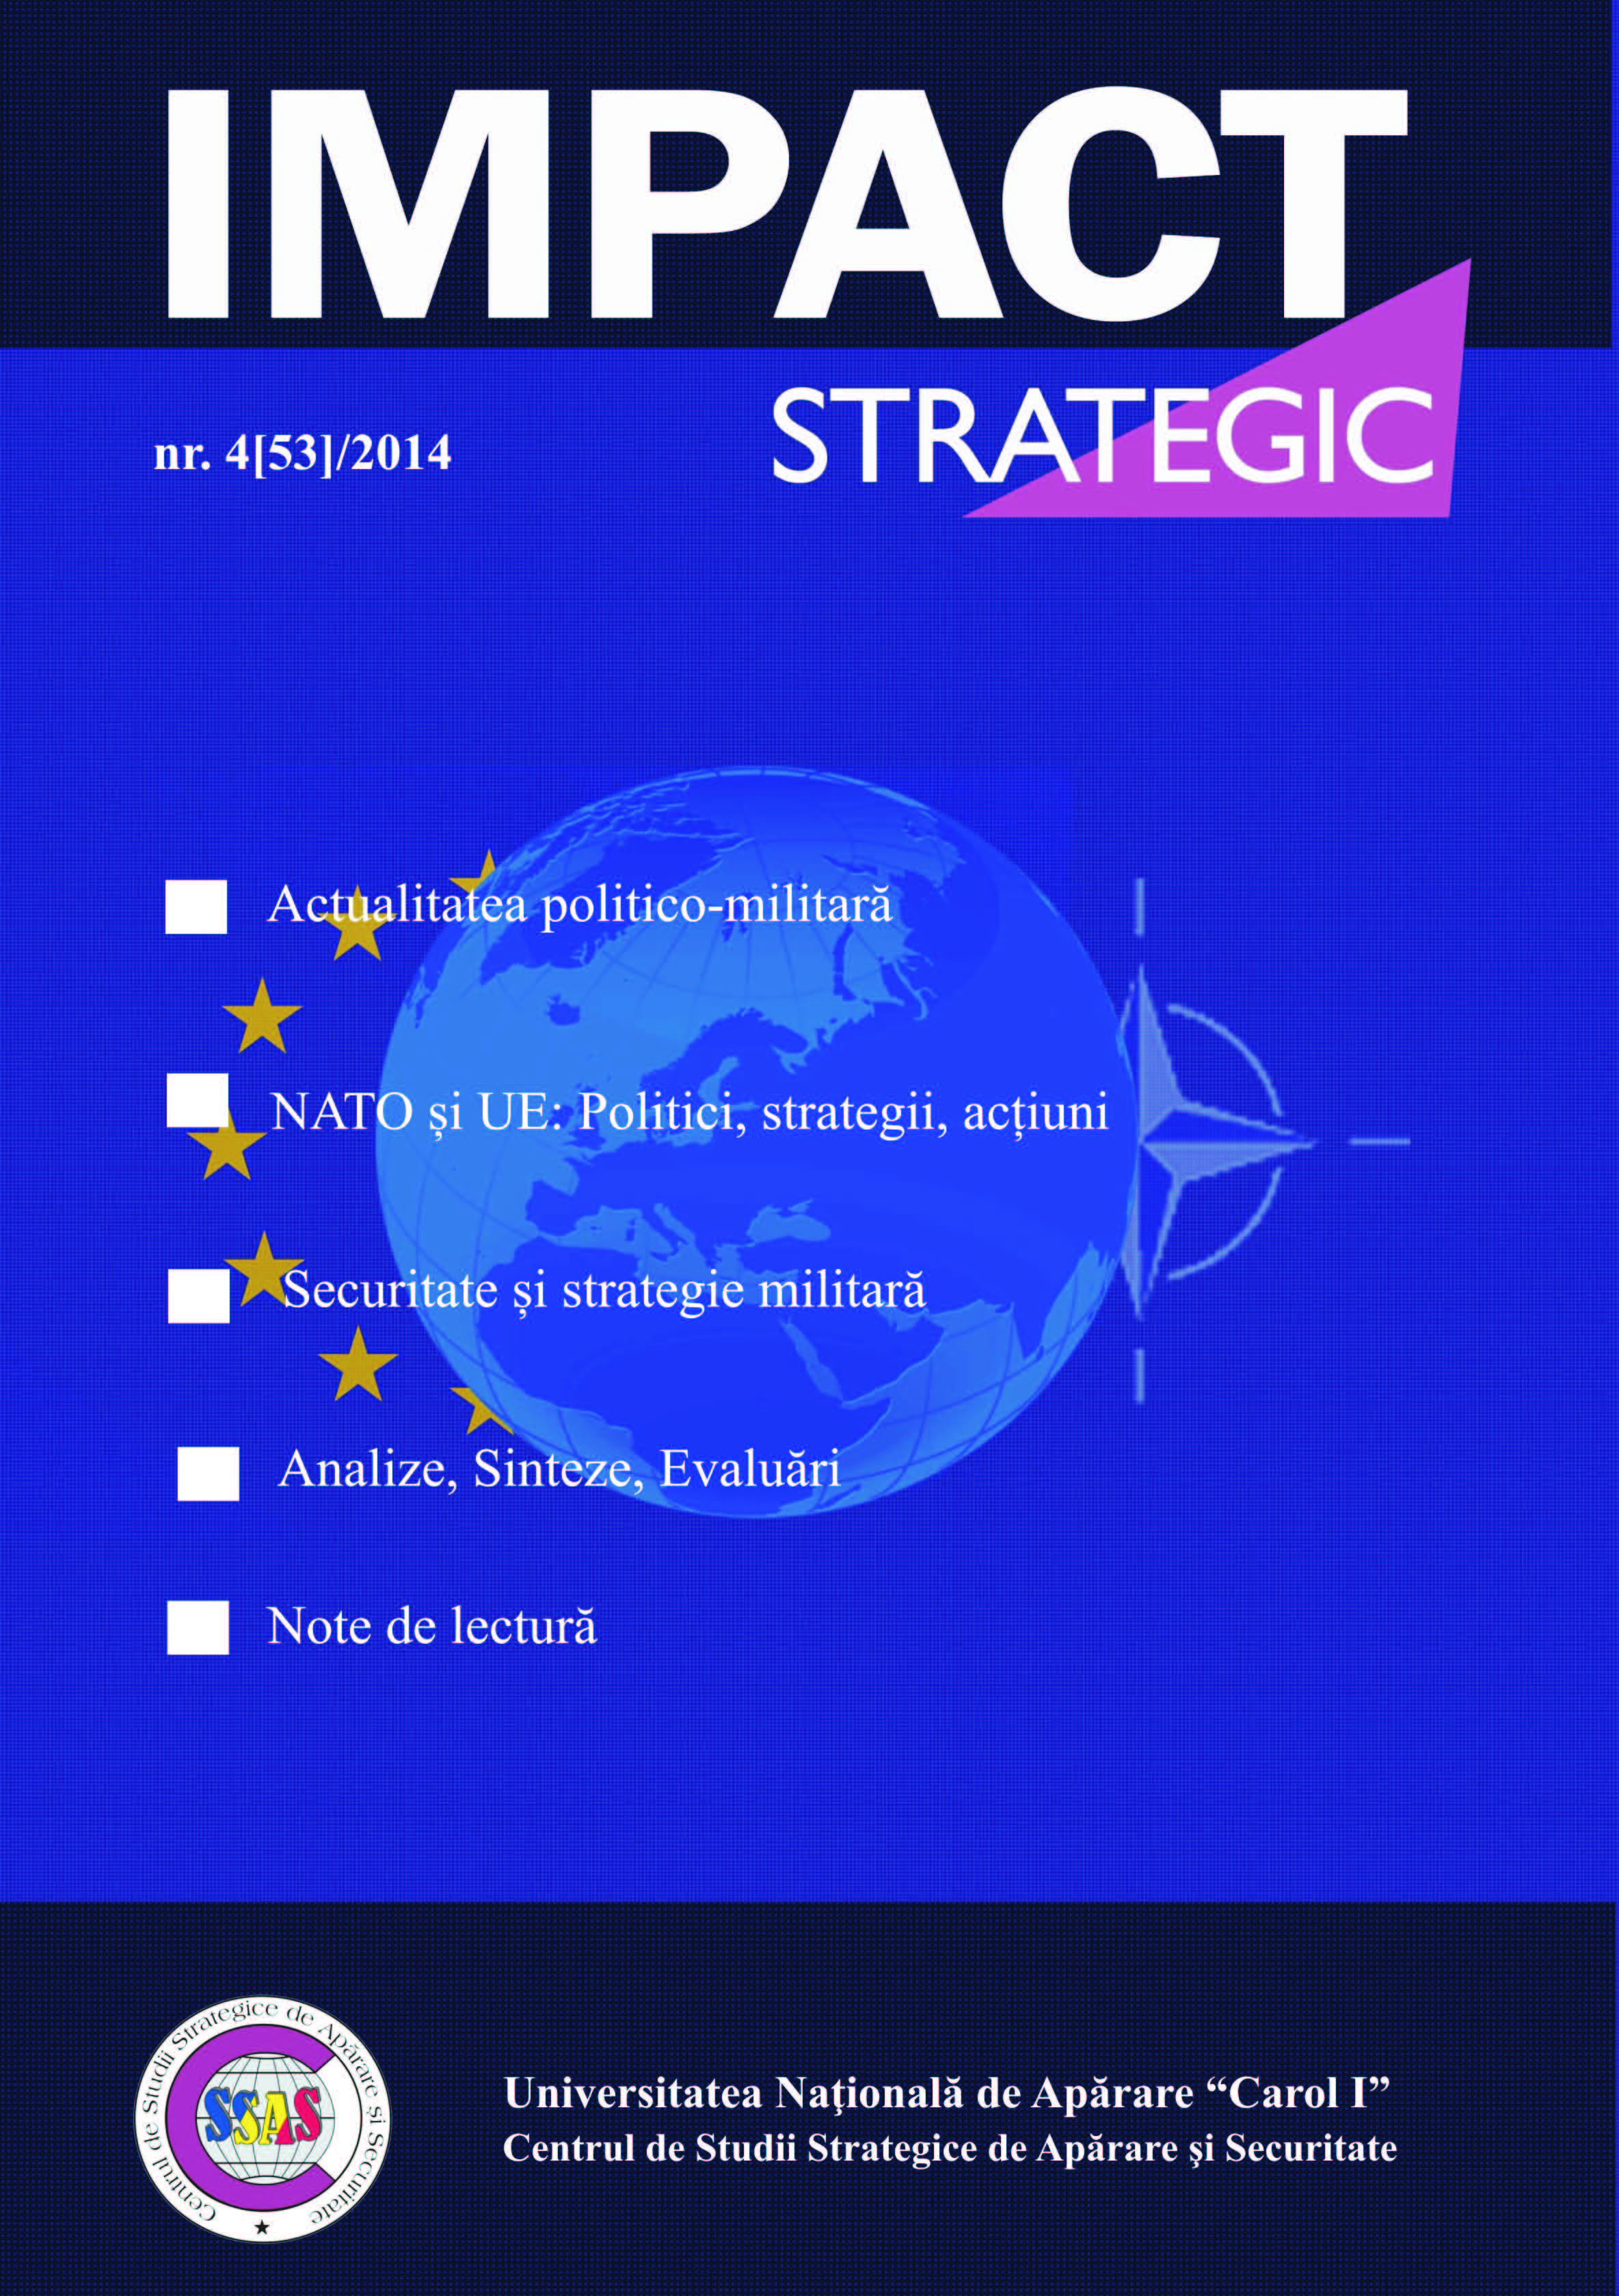 2014 NATO Summit – Future Implications Cover Image